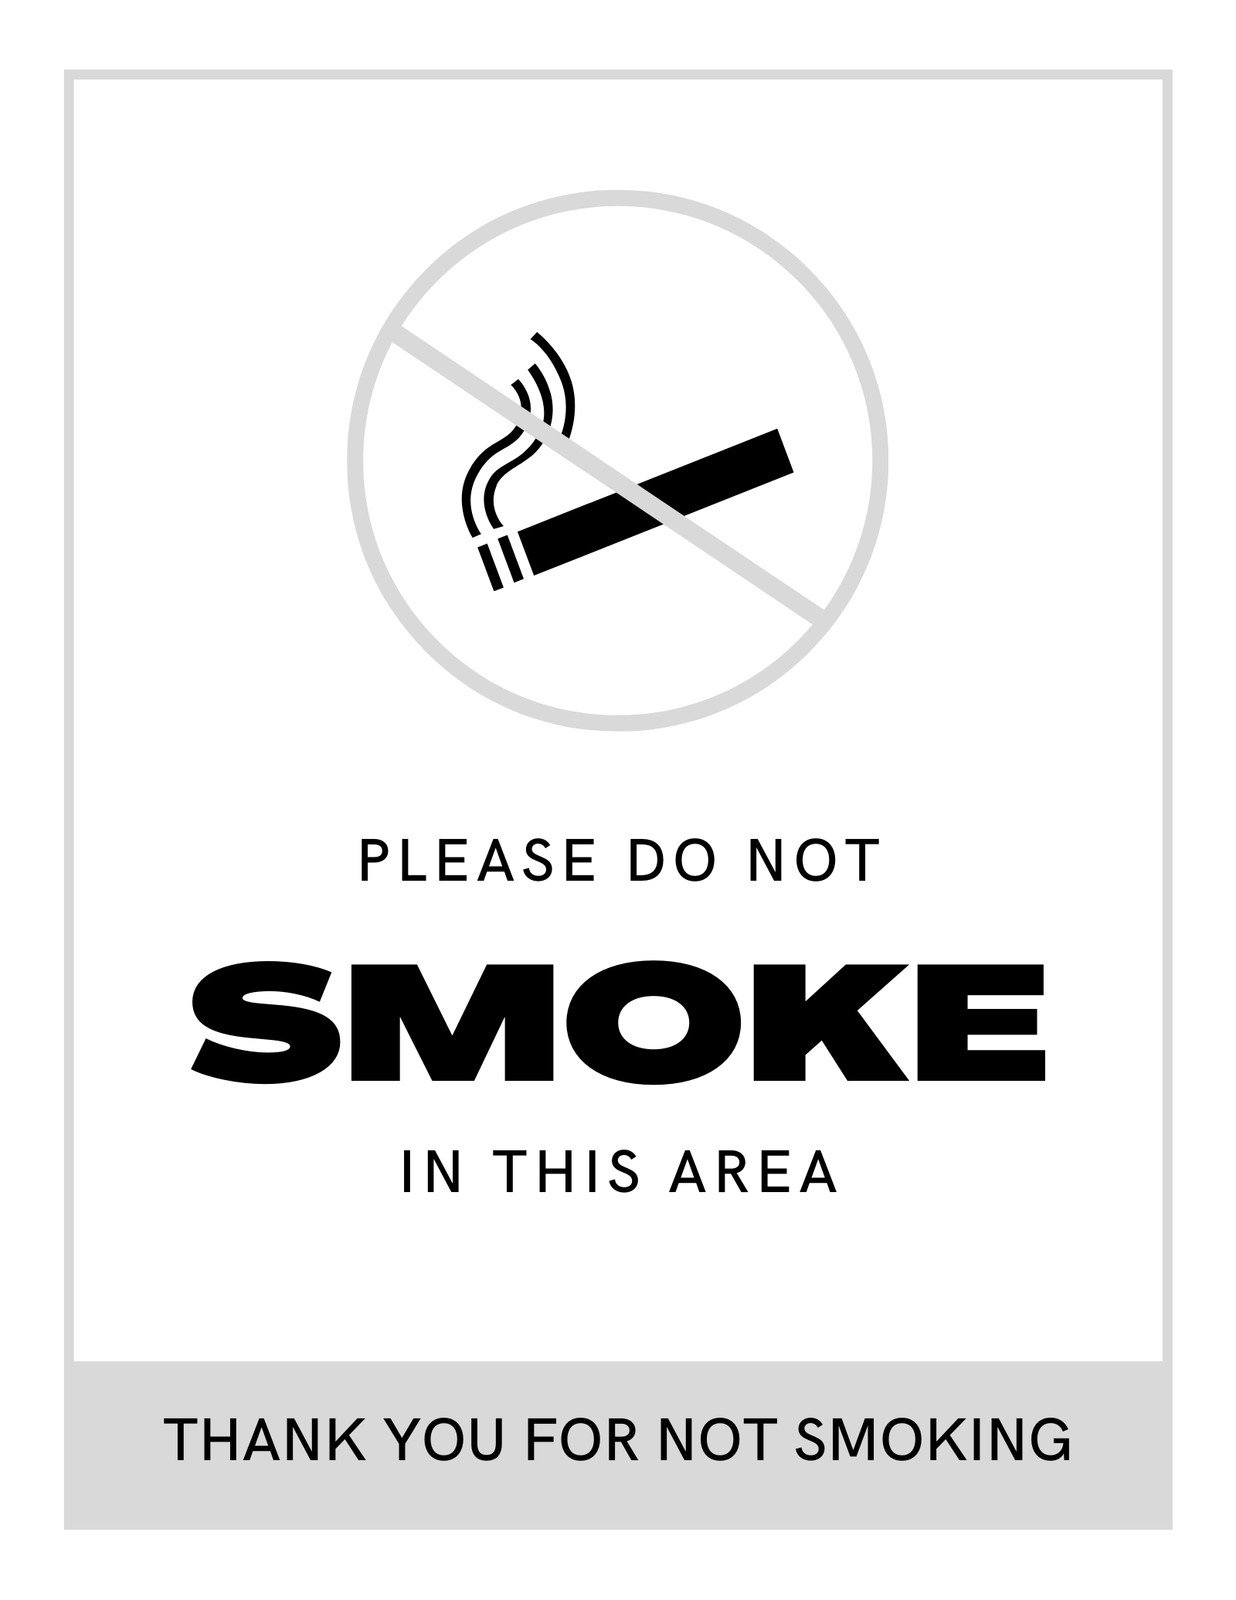 no smoking area black and white